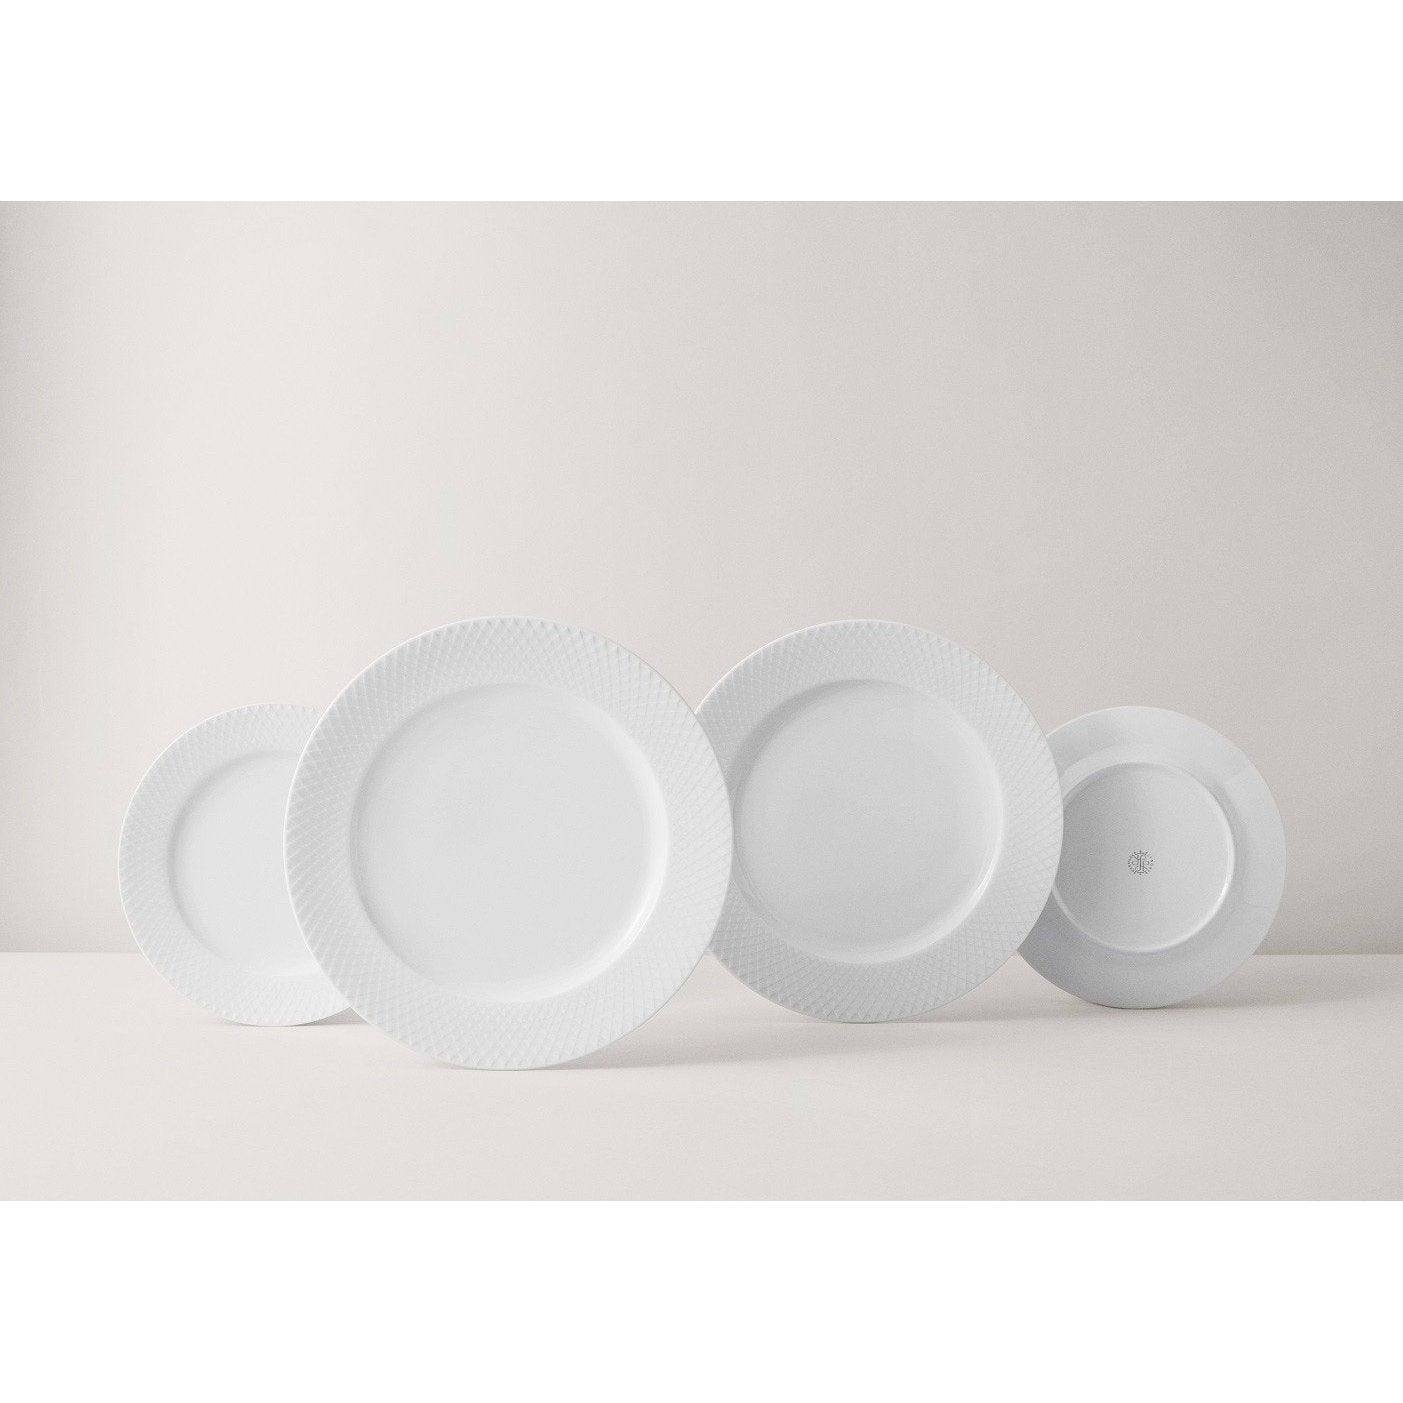 Lyngby Porcelæn Rhombe middagsplaten hvit, 27 cm